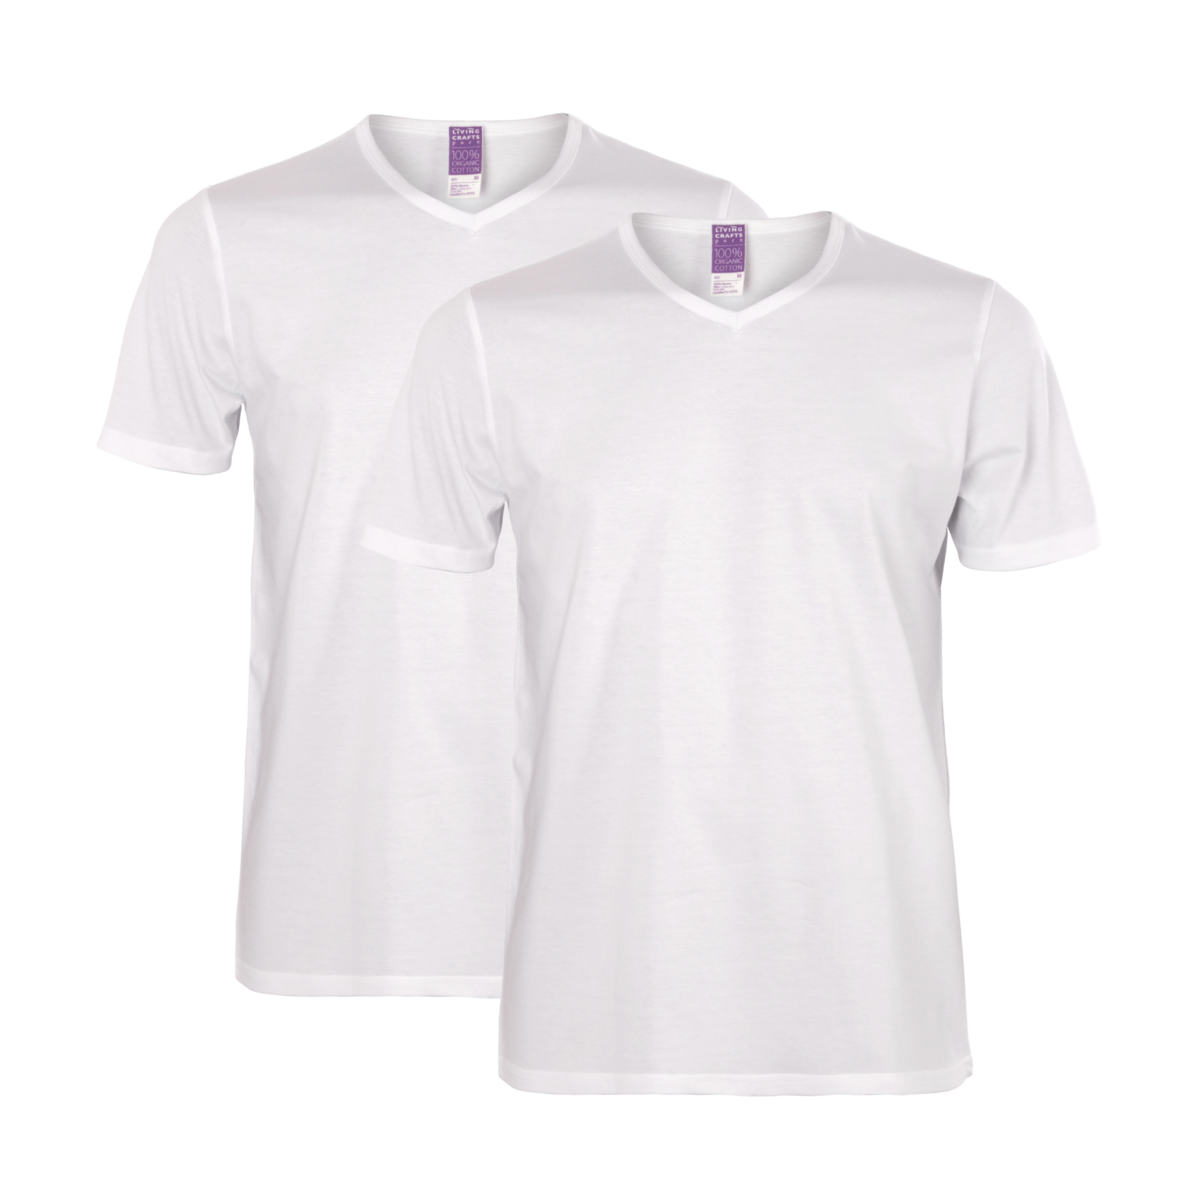 Blanc T-shirt, lot de 2, DEAN